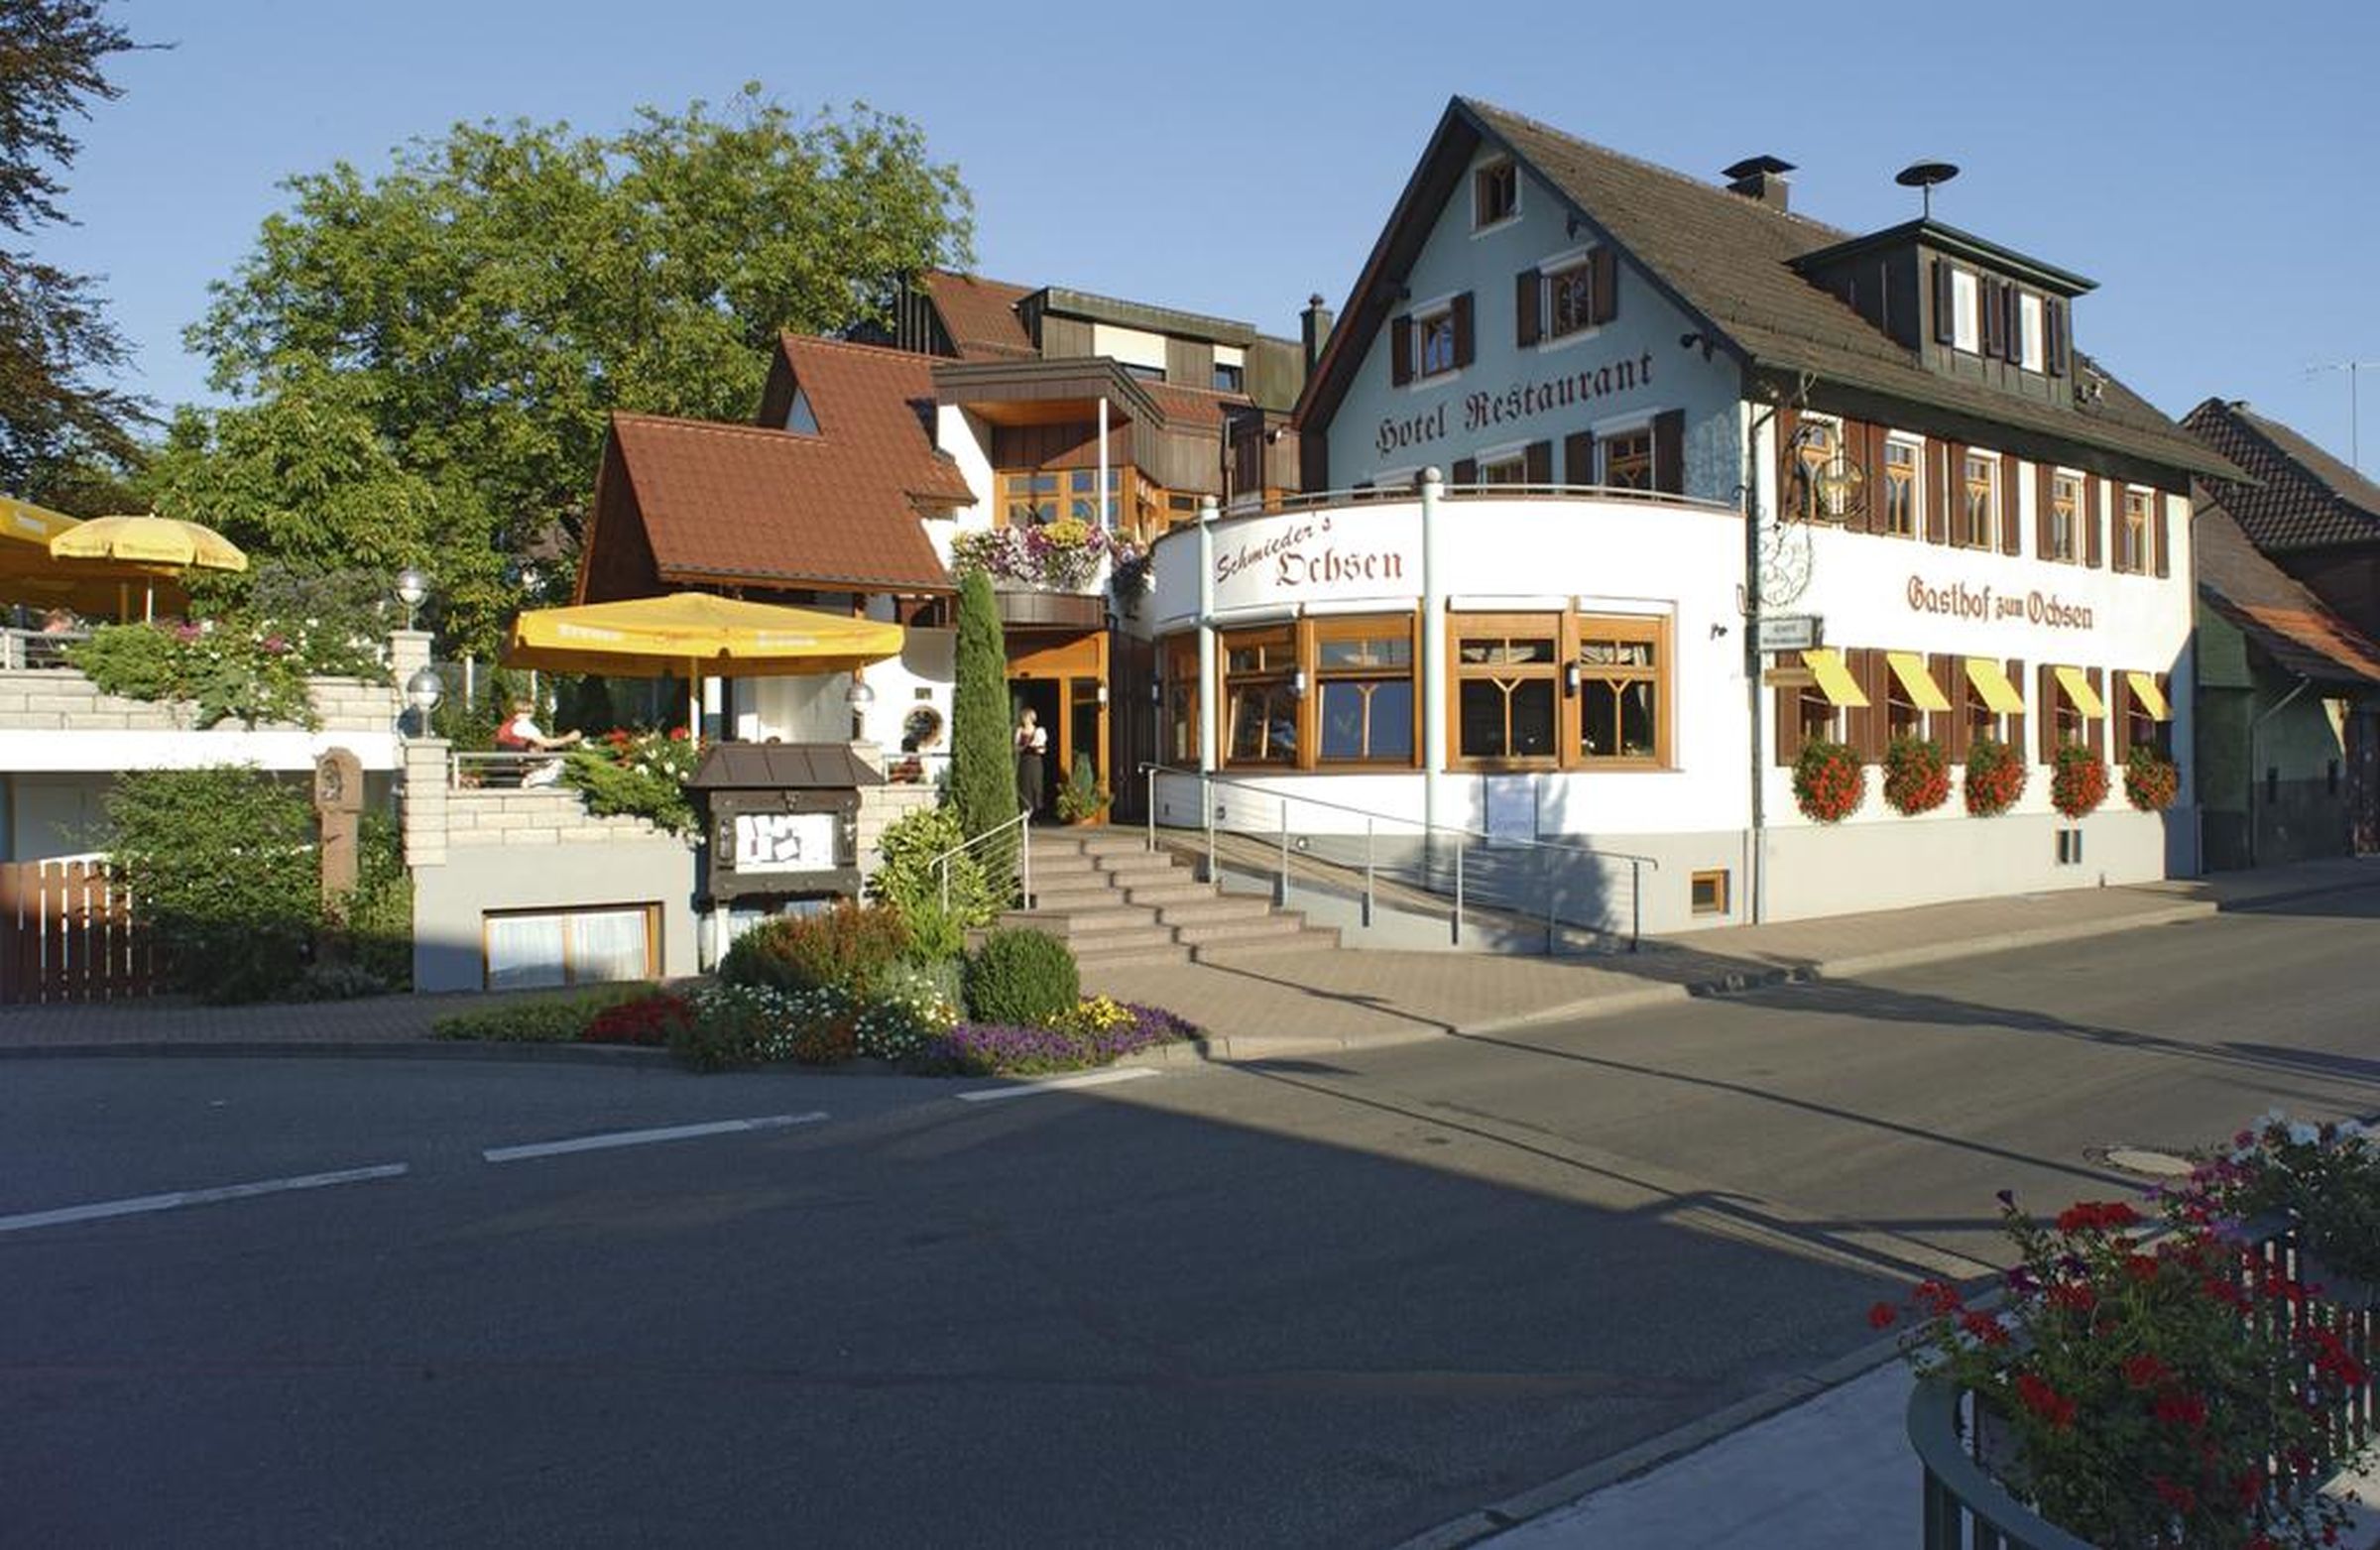 Hotel garni Schmieders Ochsen, (Seelbach). Dreibet Ferienhaus in Europa